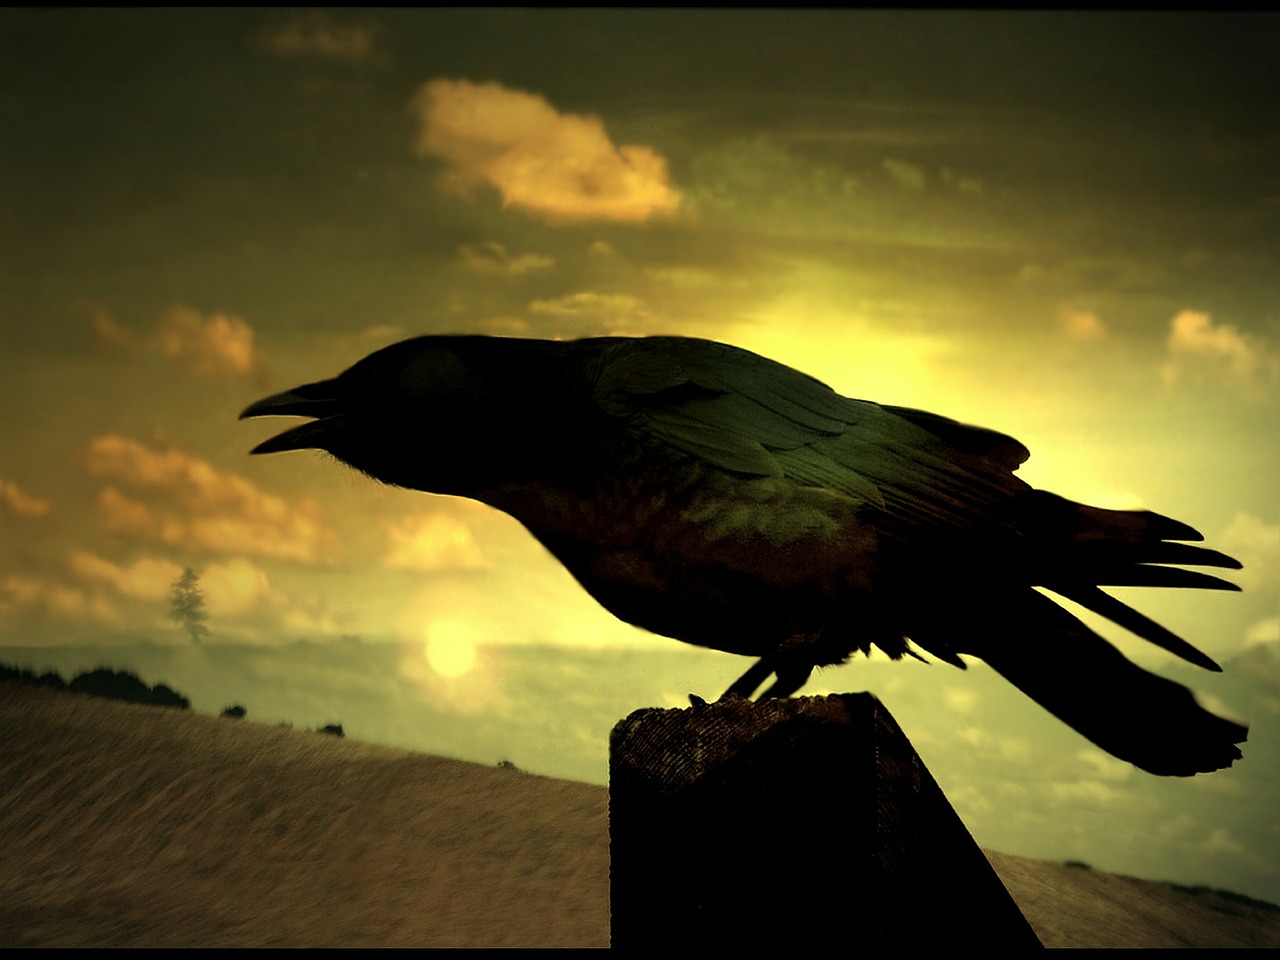 Let’s Read Edgar Allan Poe’s “The Raven”